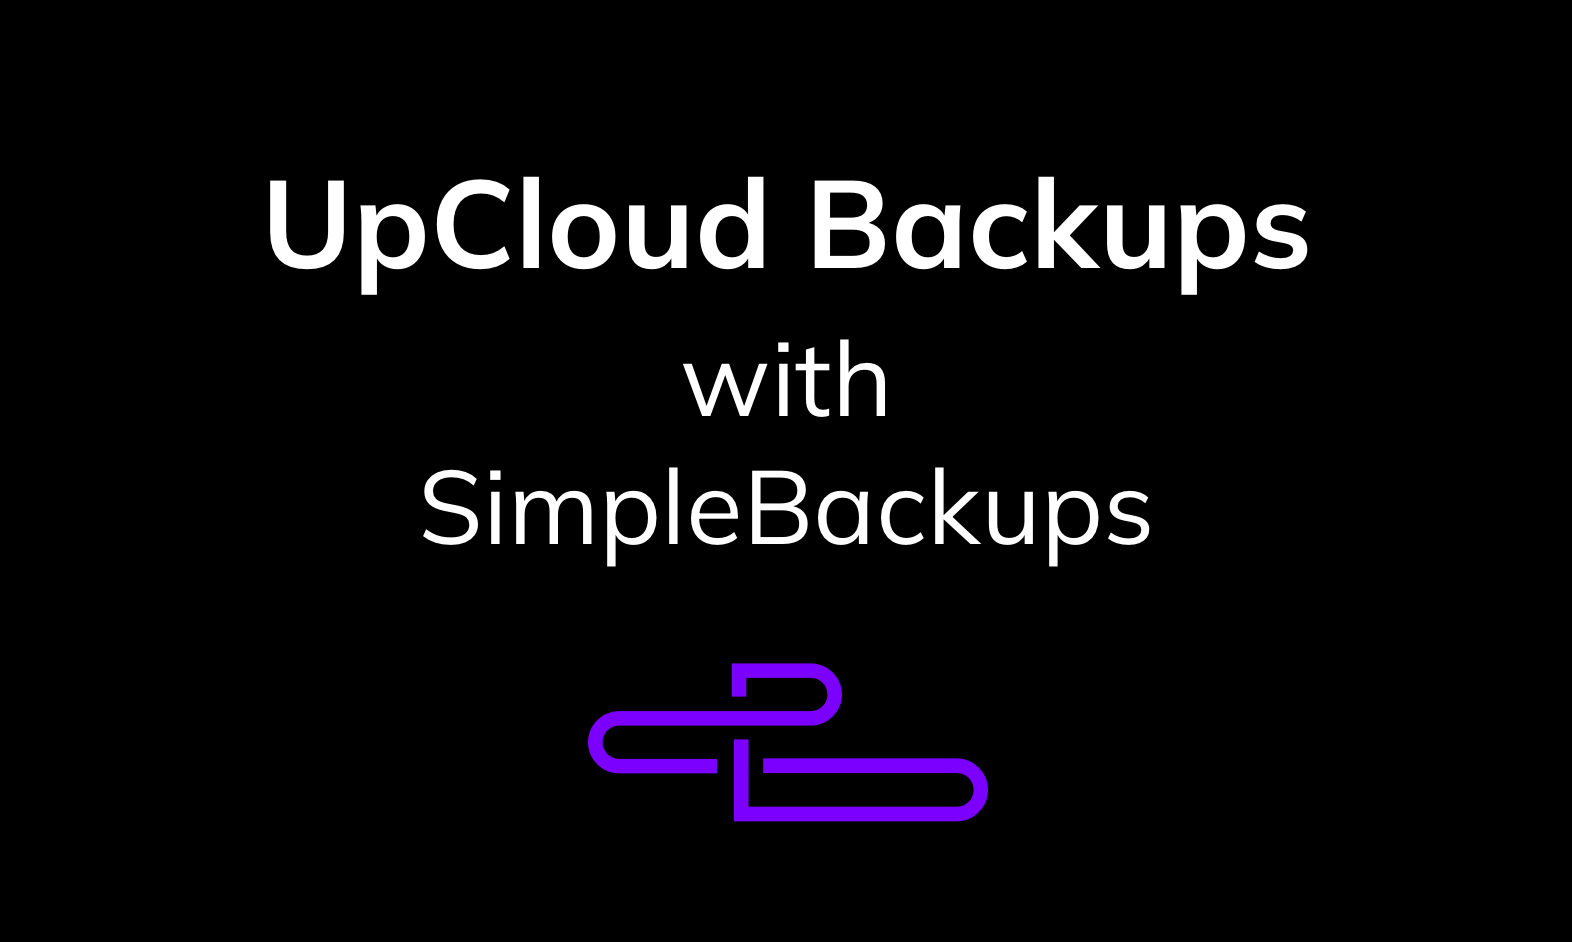 UpCloud Backups with SimpleBackups